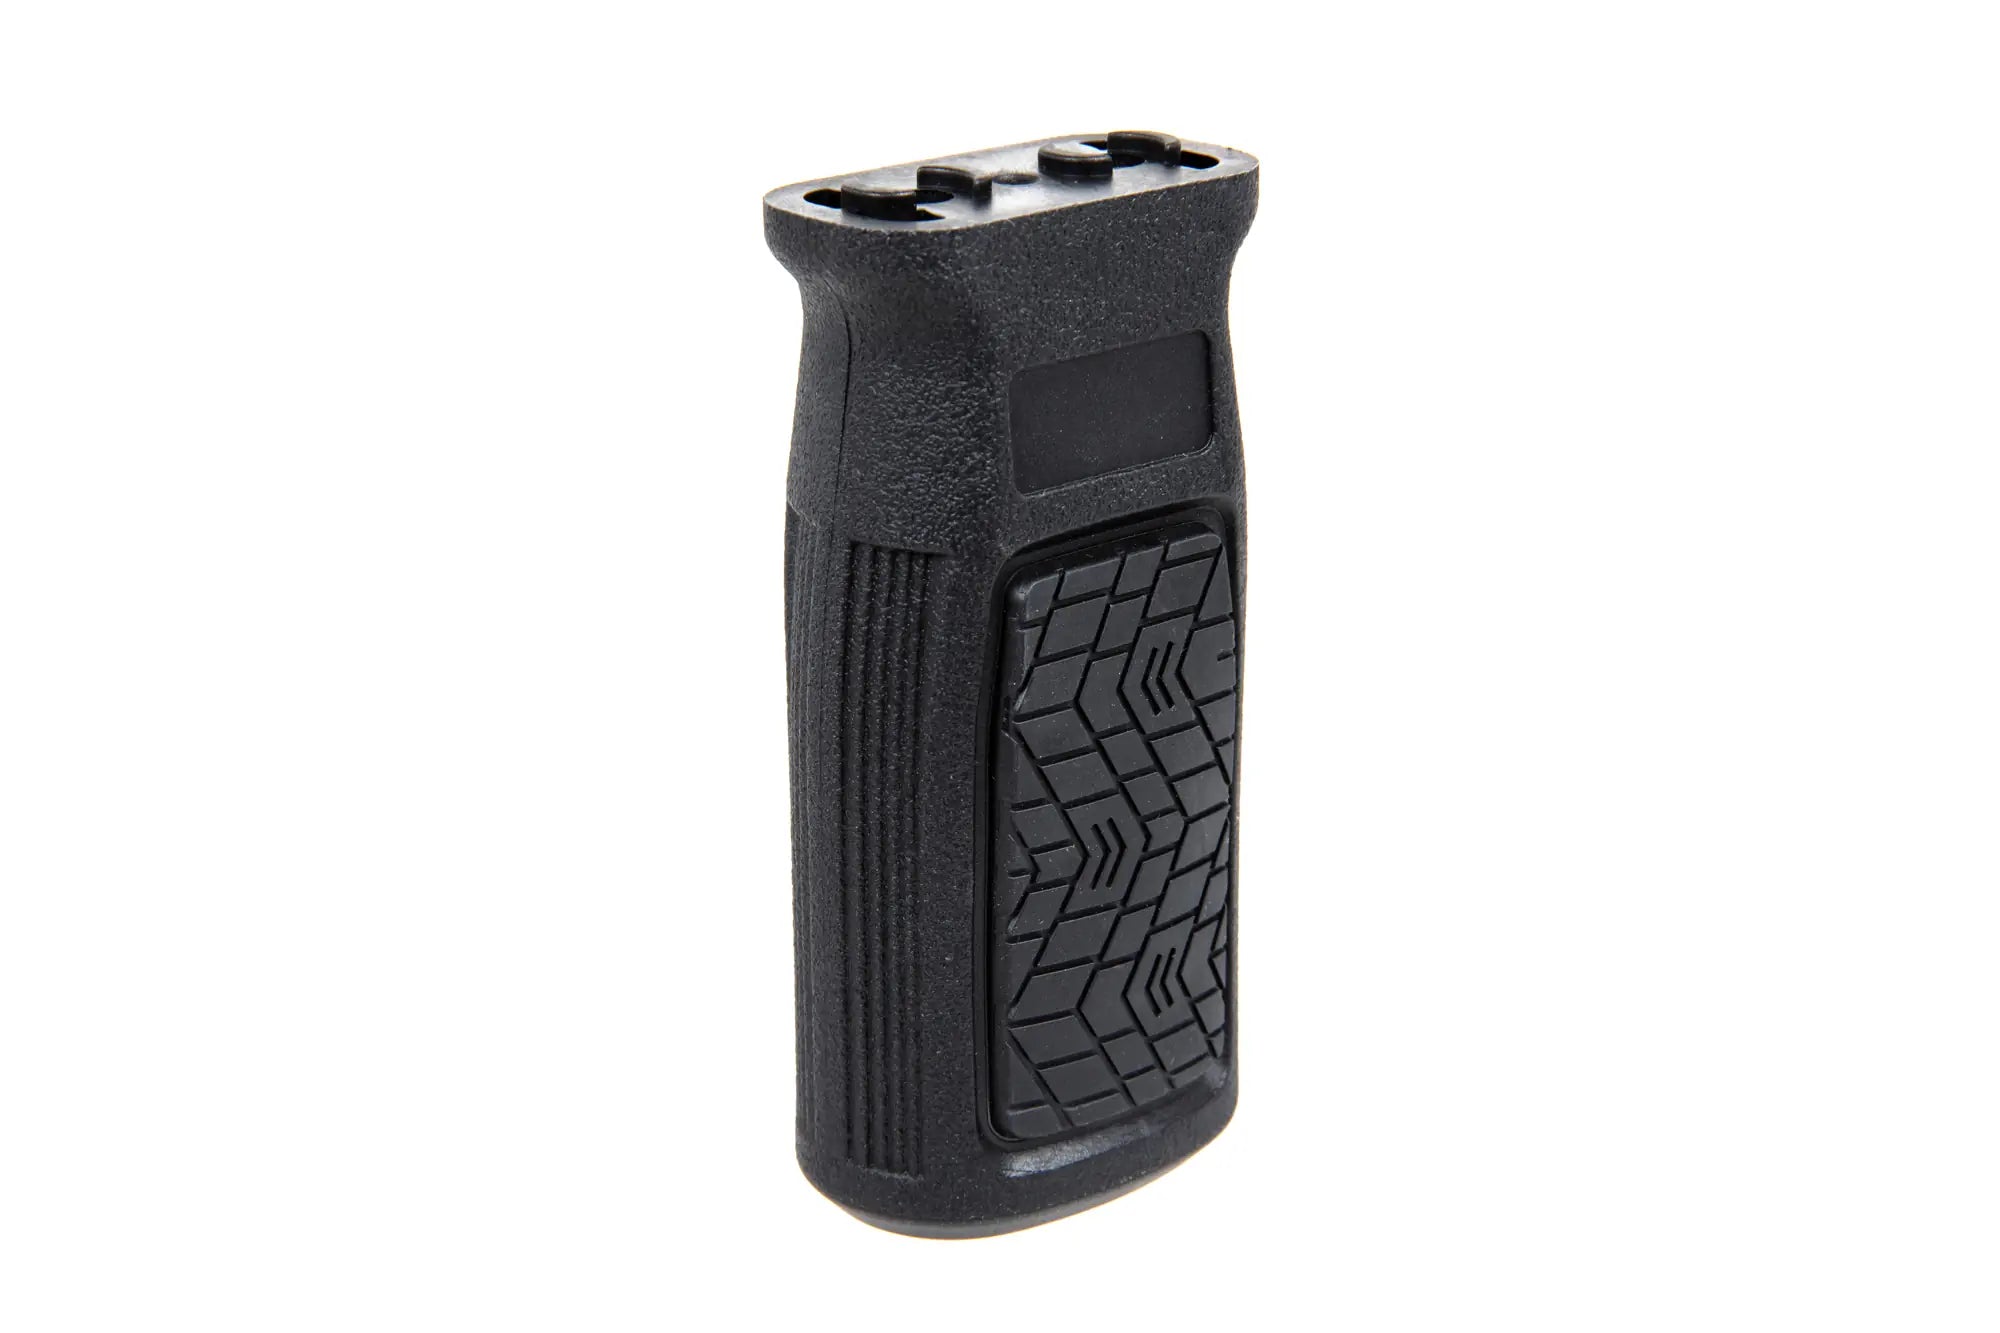 FMA M-LOK vertical front grip in Black, durable material, secure grip.